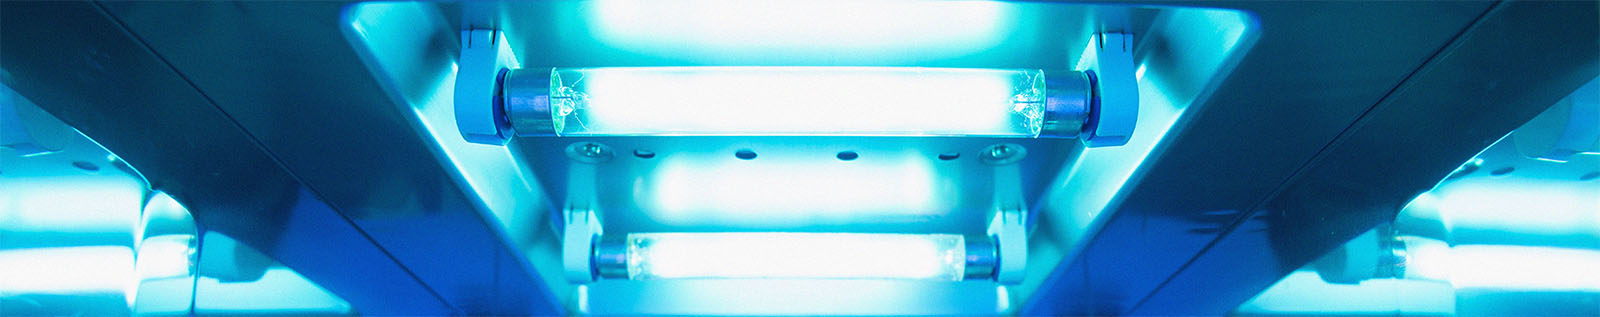 UV-C Air Filter Close Up